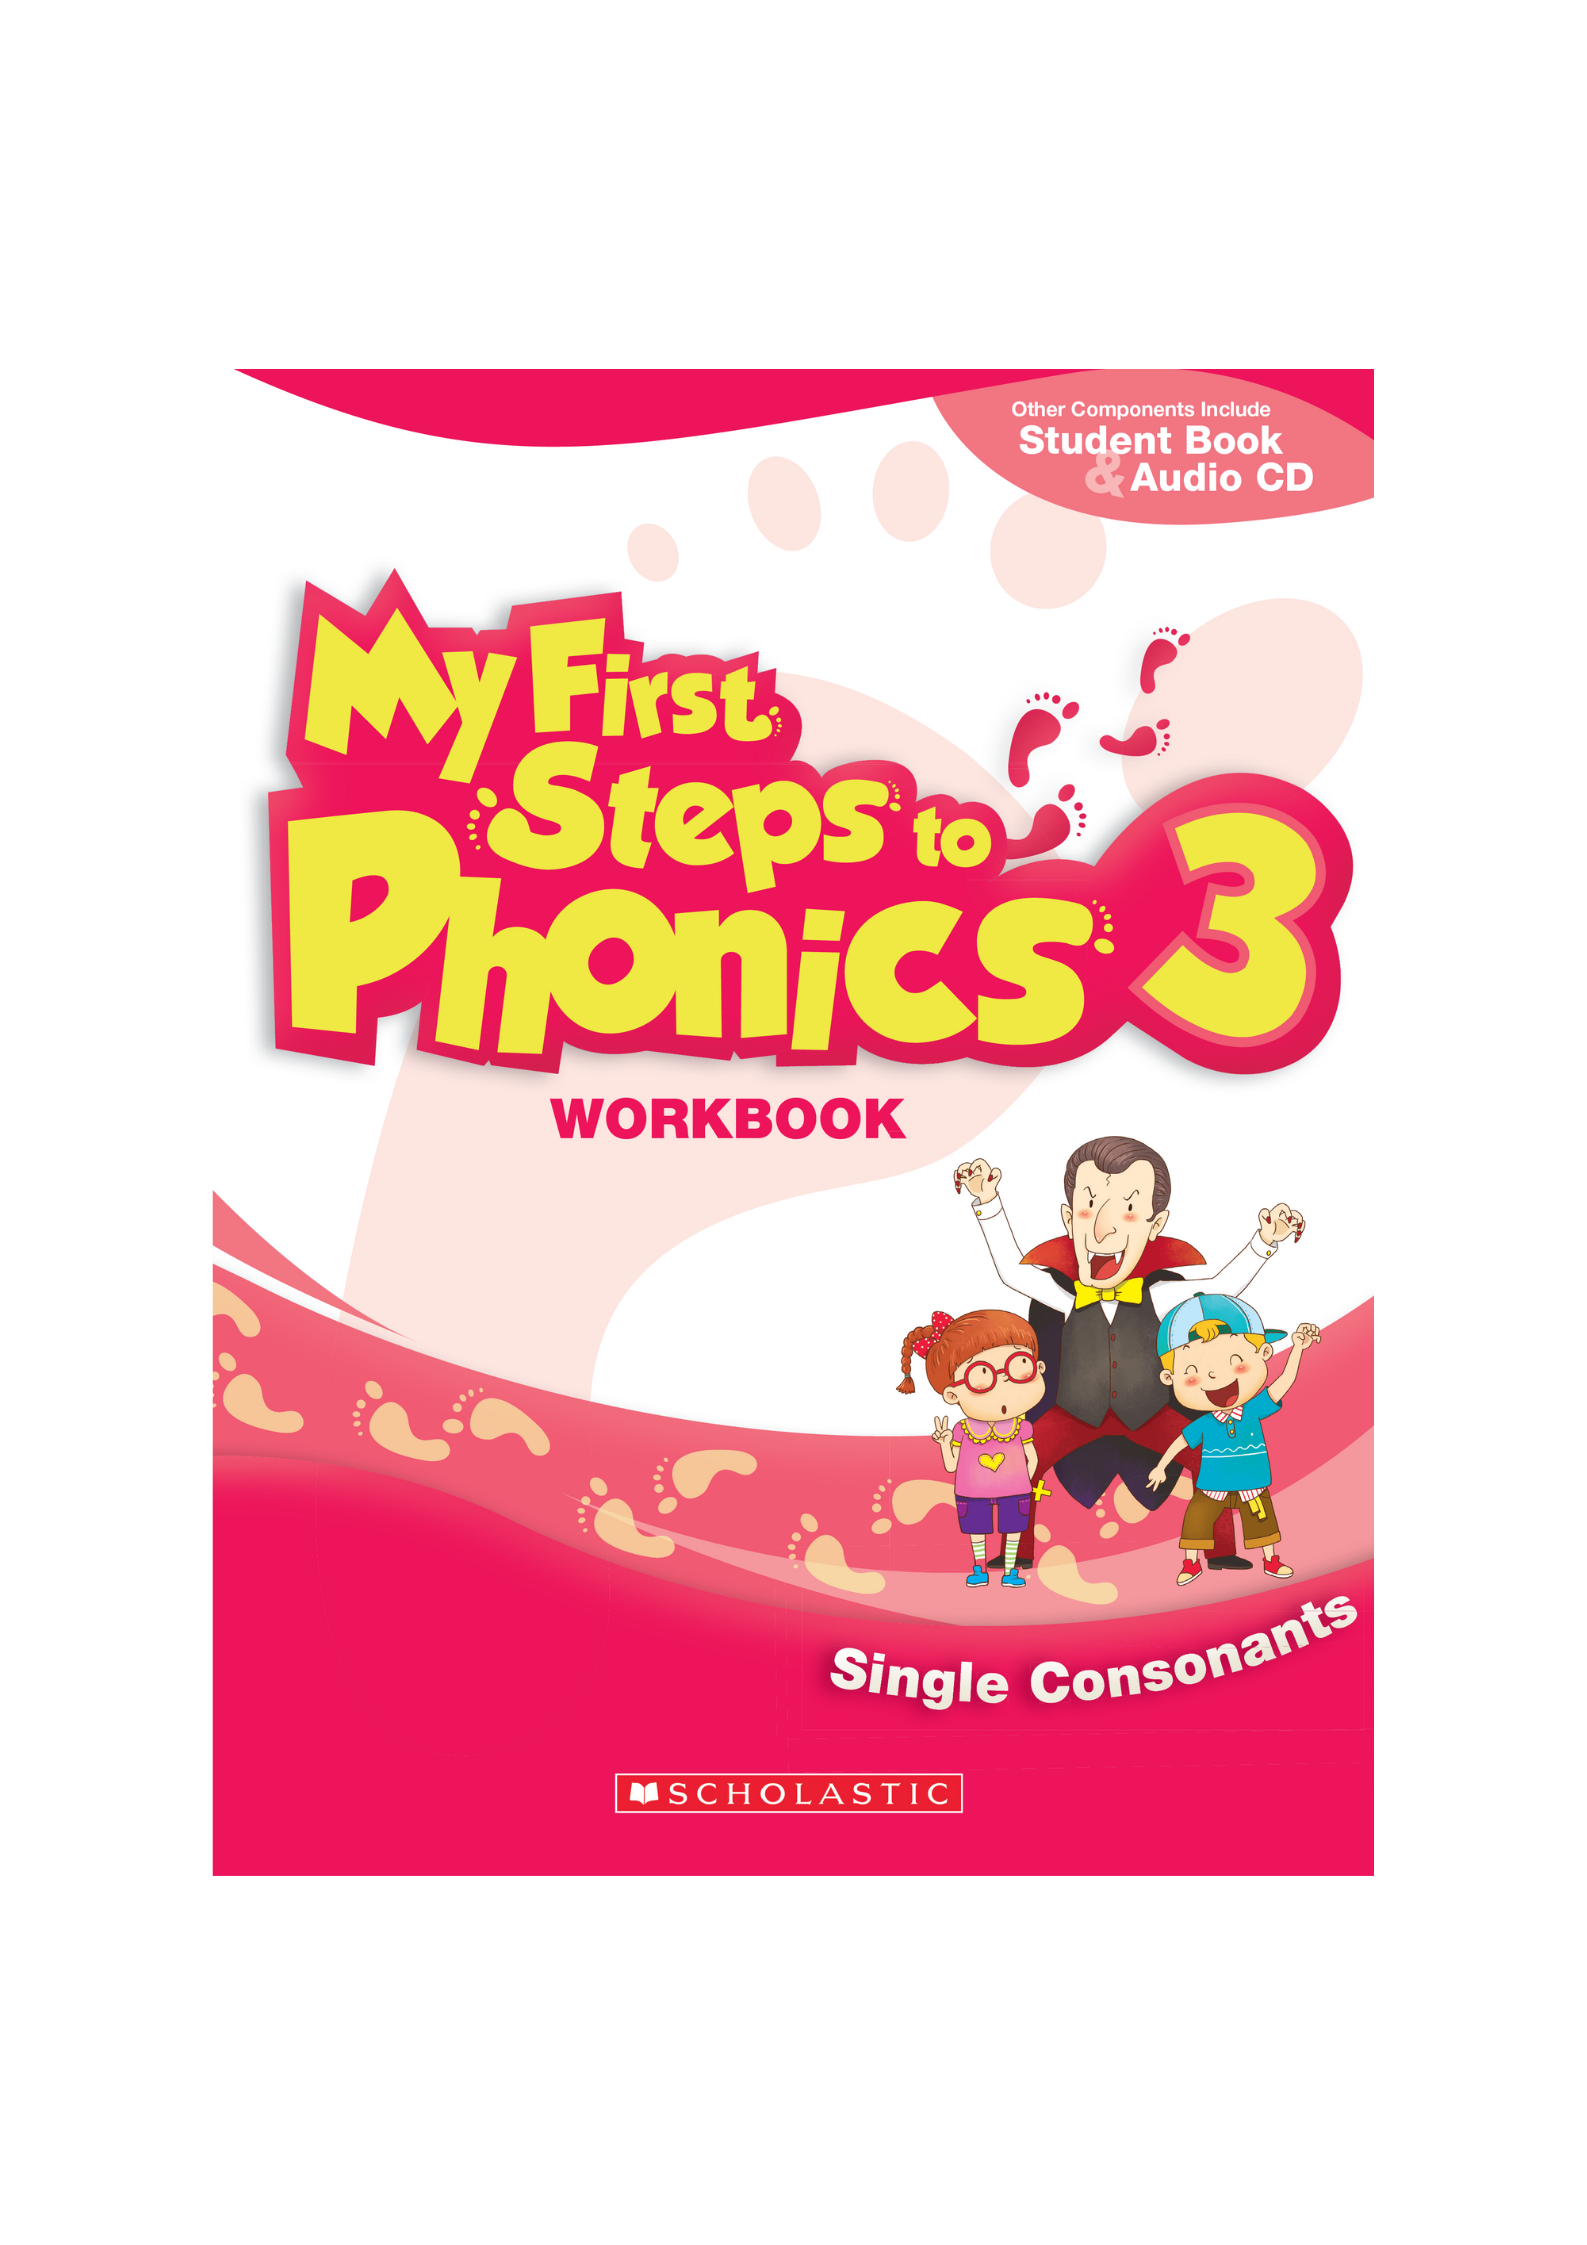 My First Step to Phonics 3: Workbook